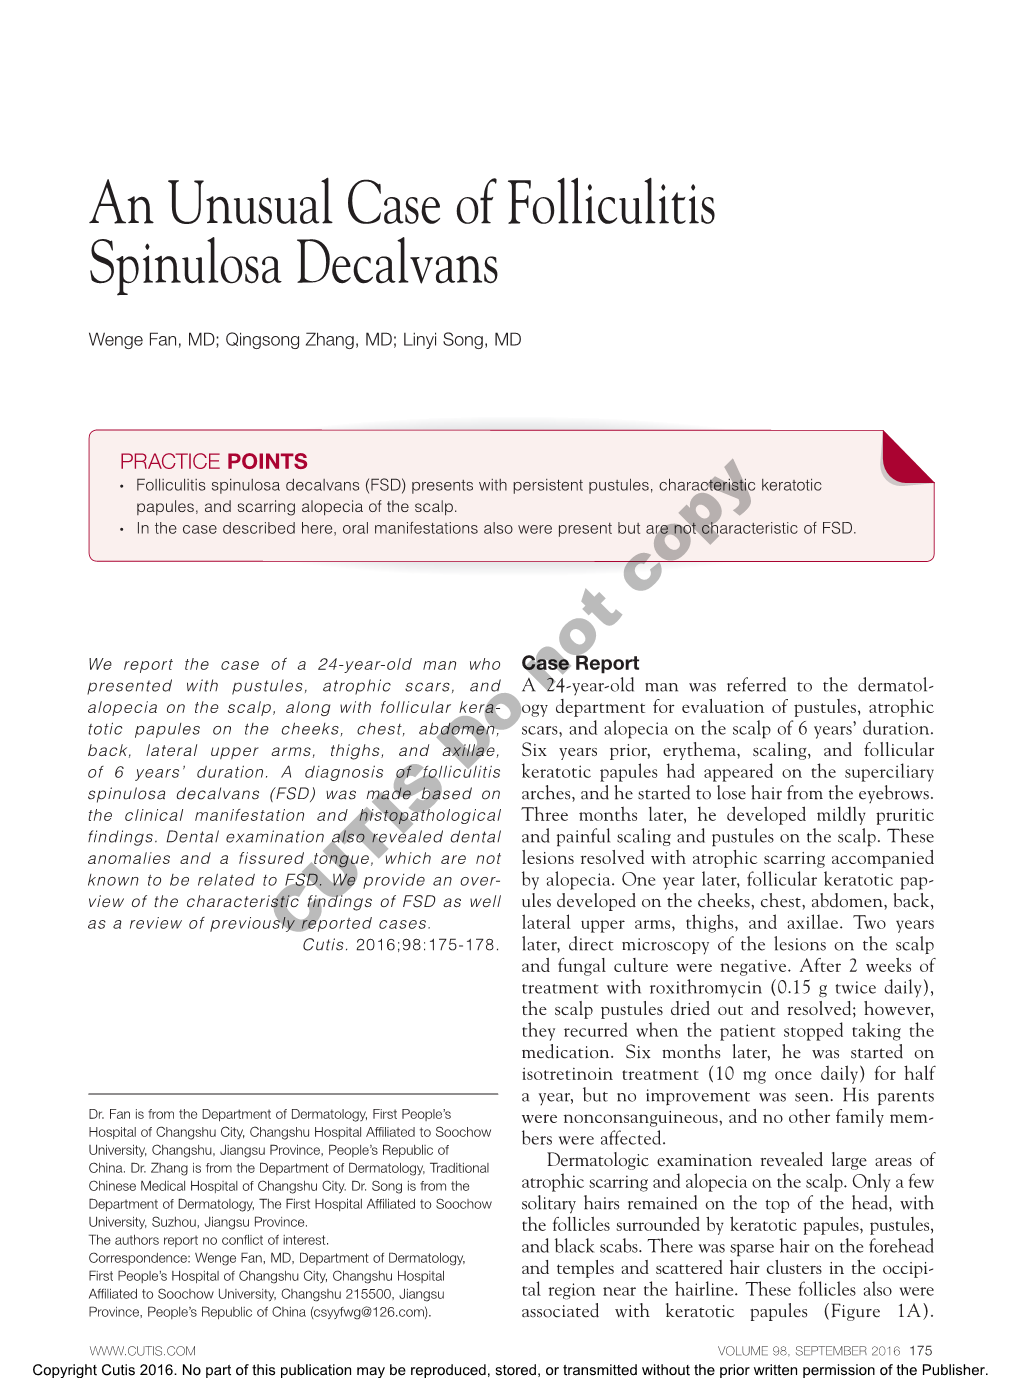 An Unusual Case of Folliculitis Spinulosa Decalvans